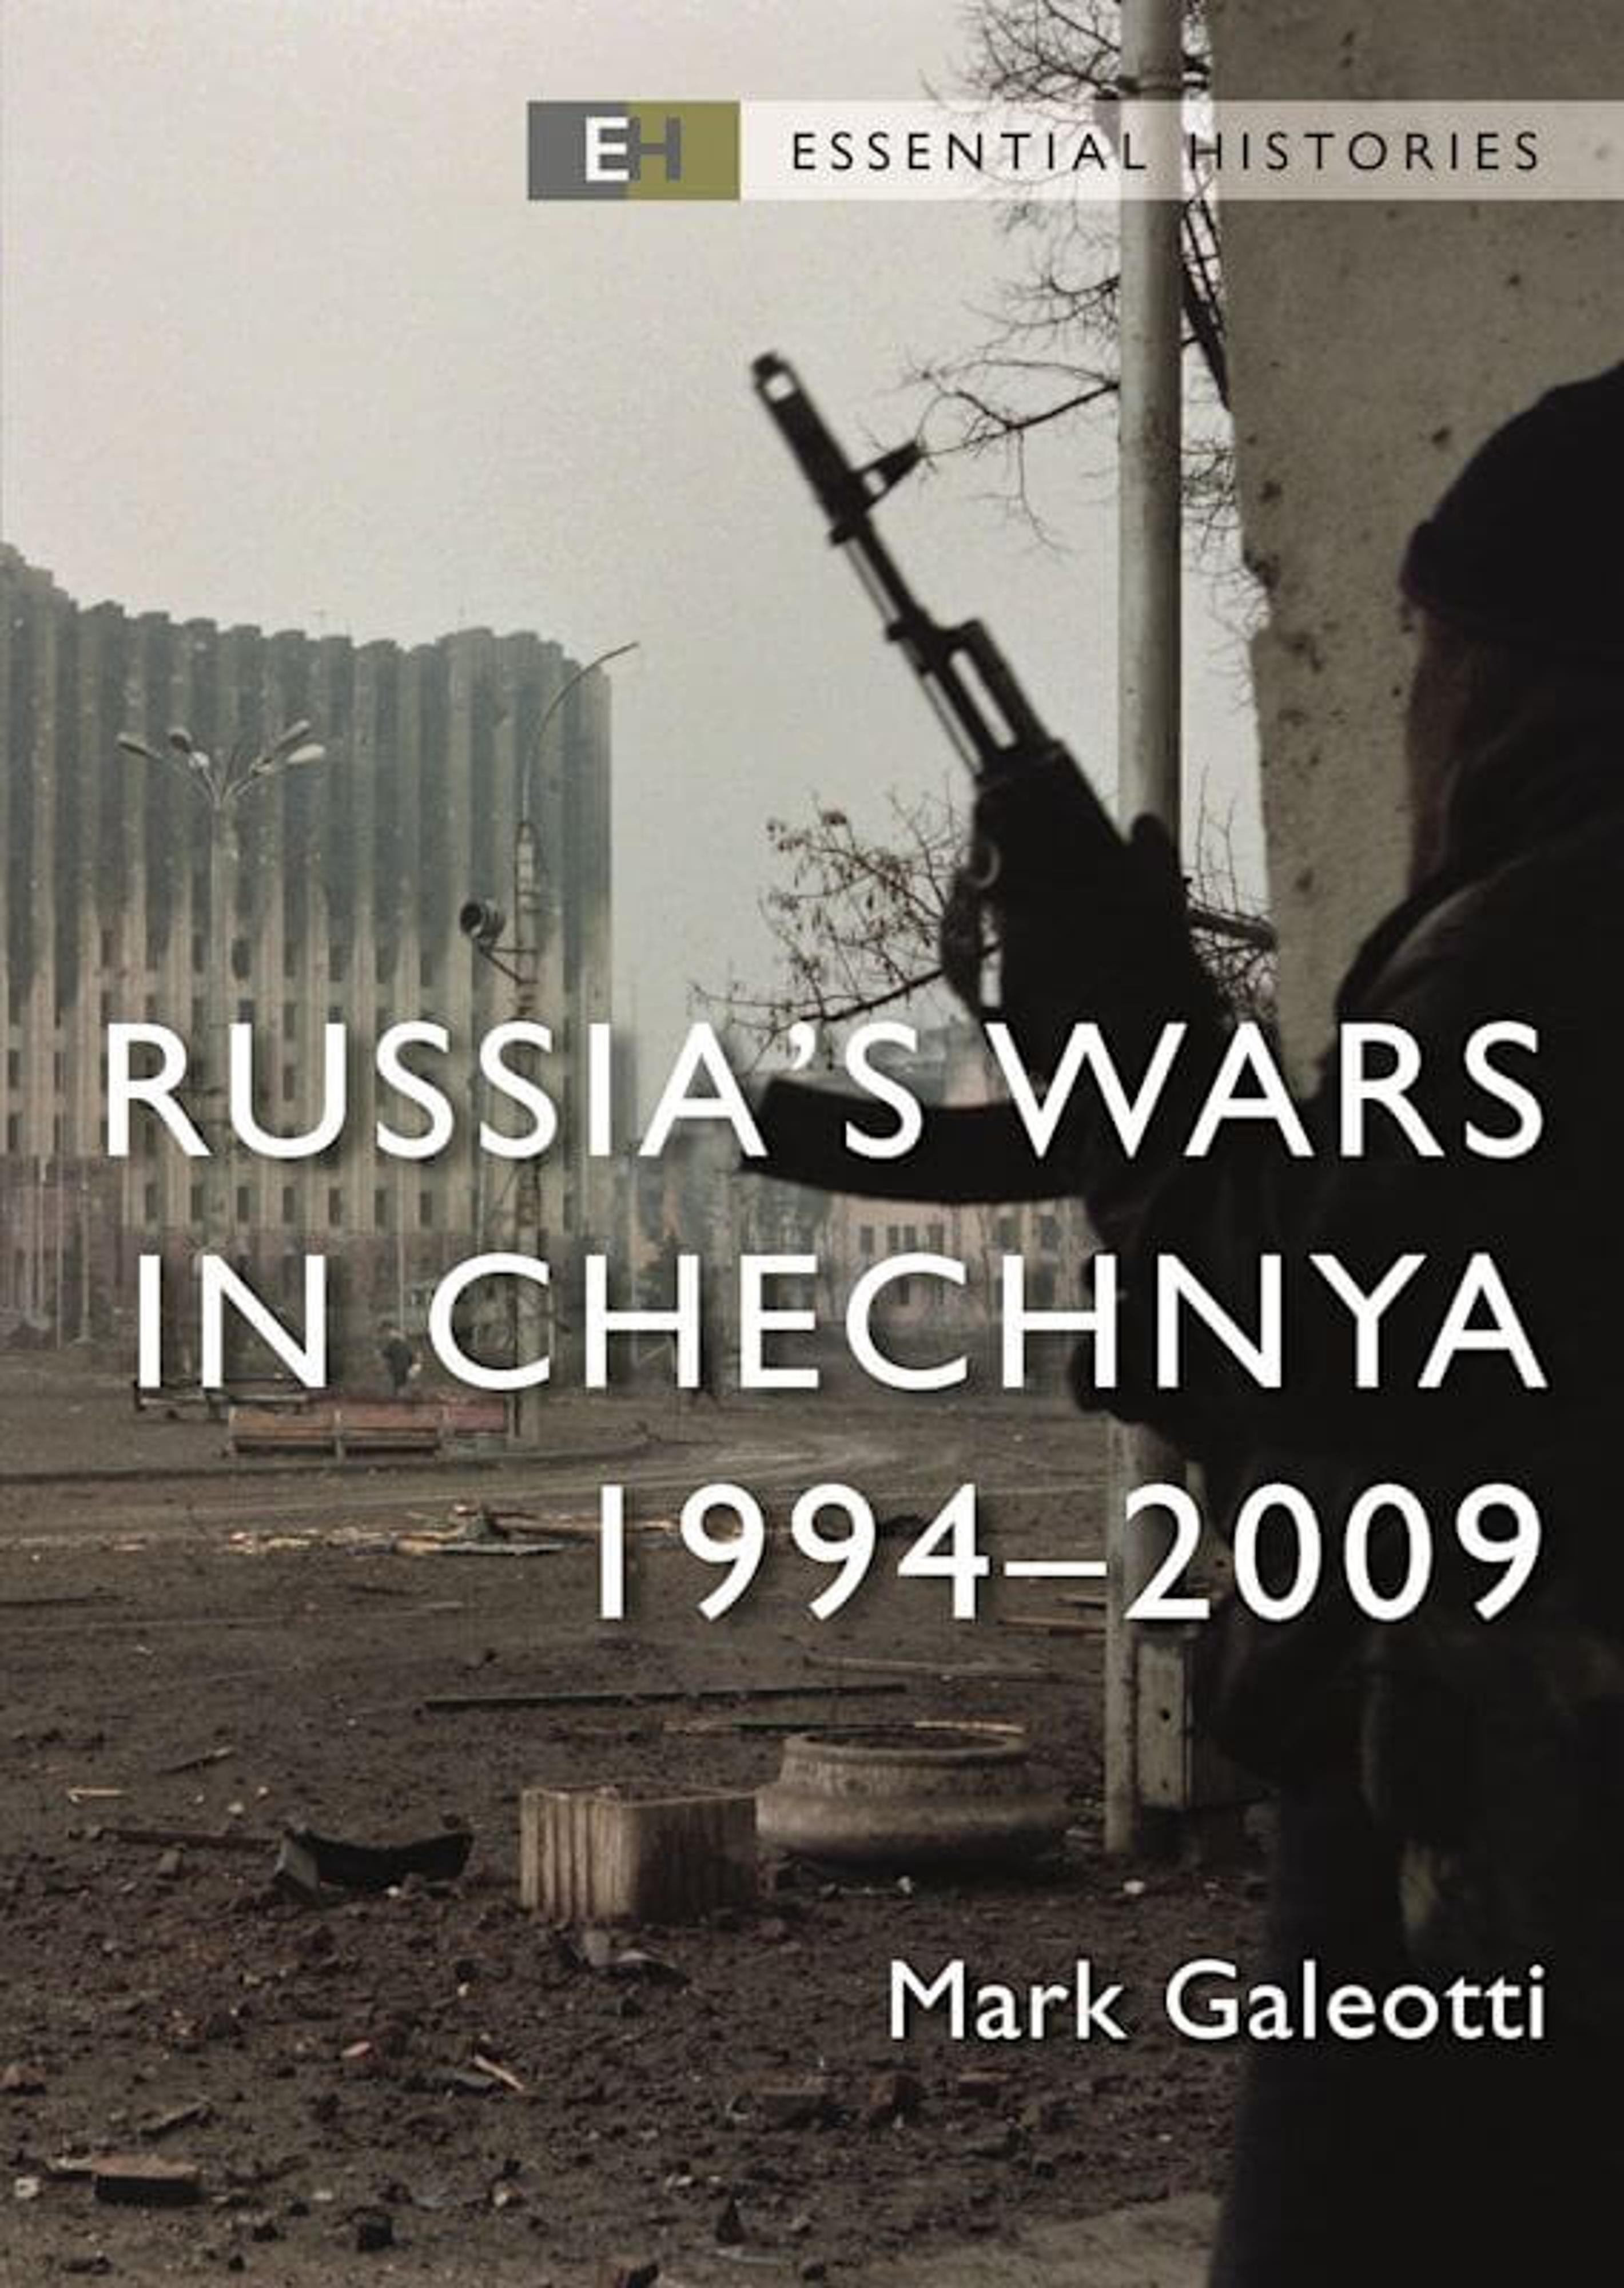 Russias War in Chechnya: 1994-2009